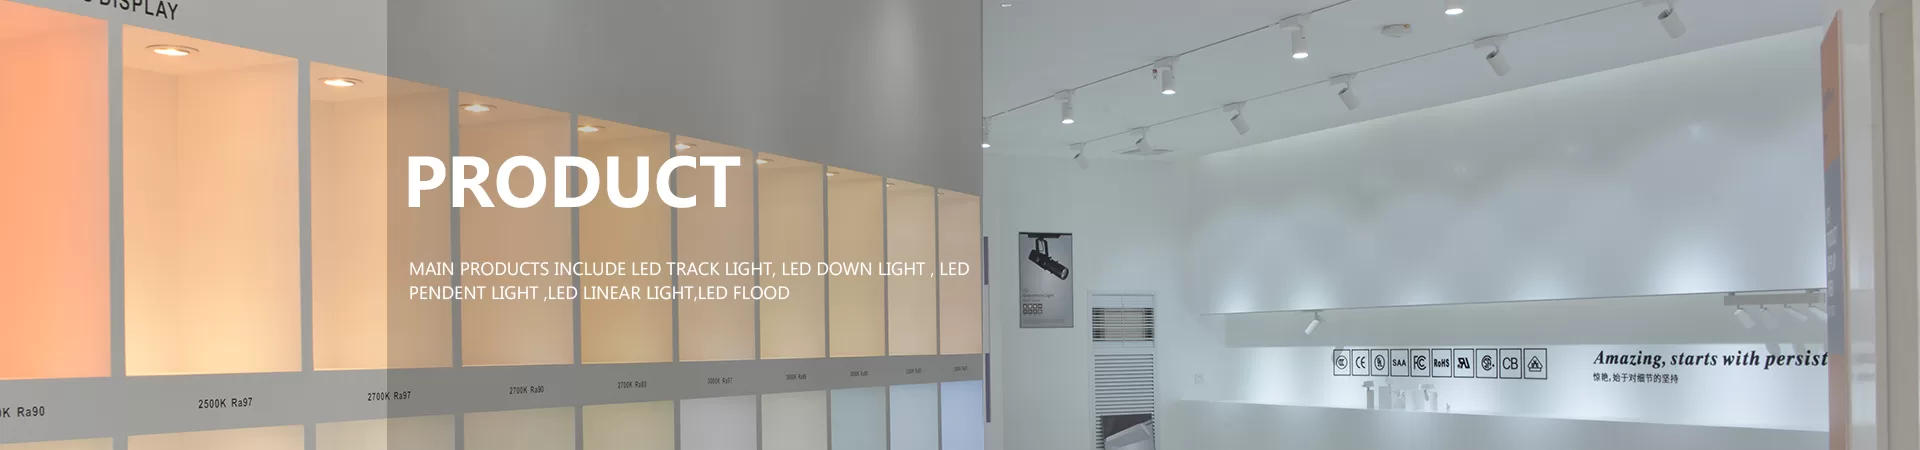 mini track lighting Adjustable Dimmable Energy saving 10W LED light